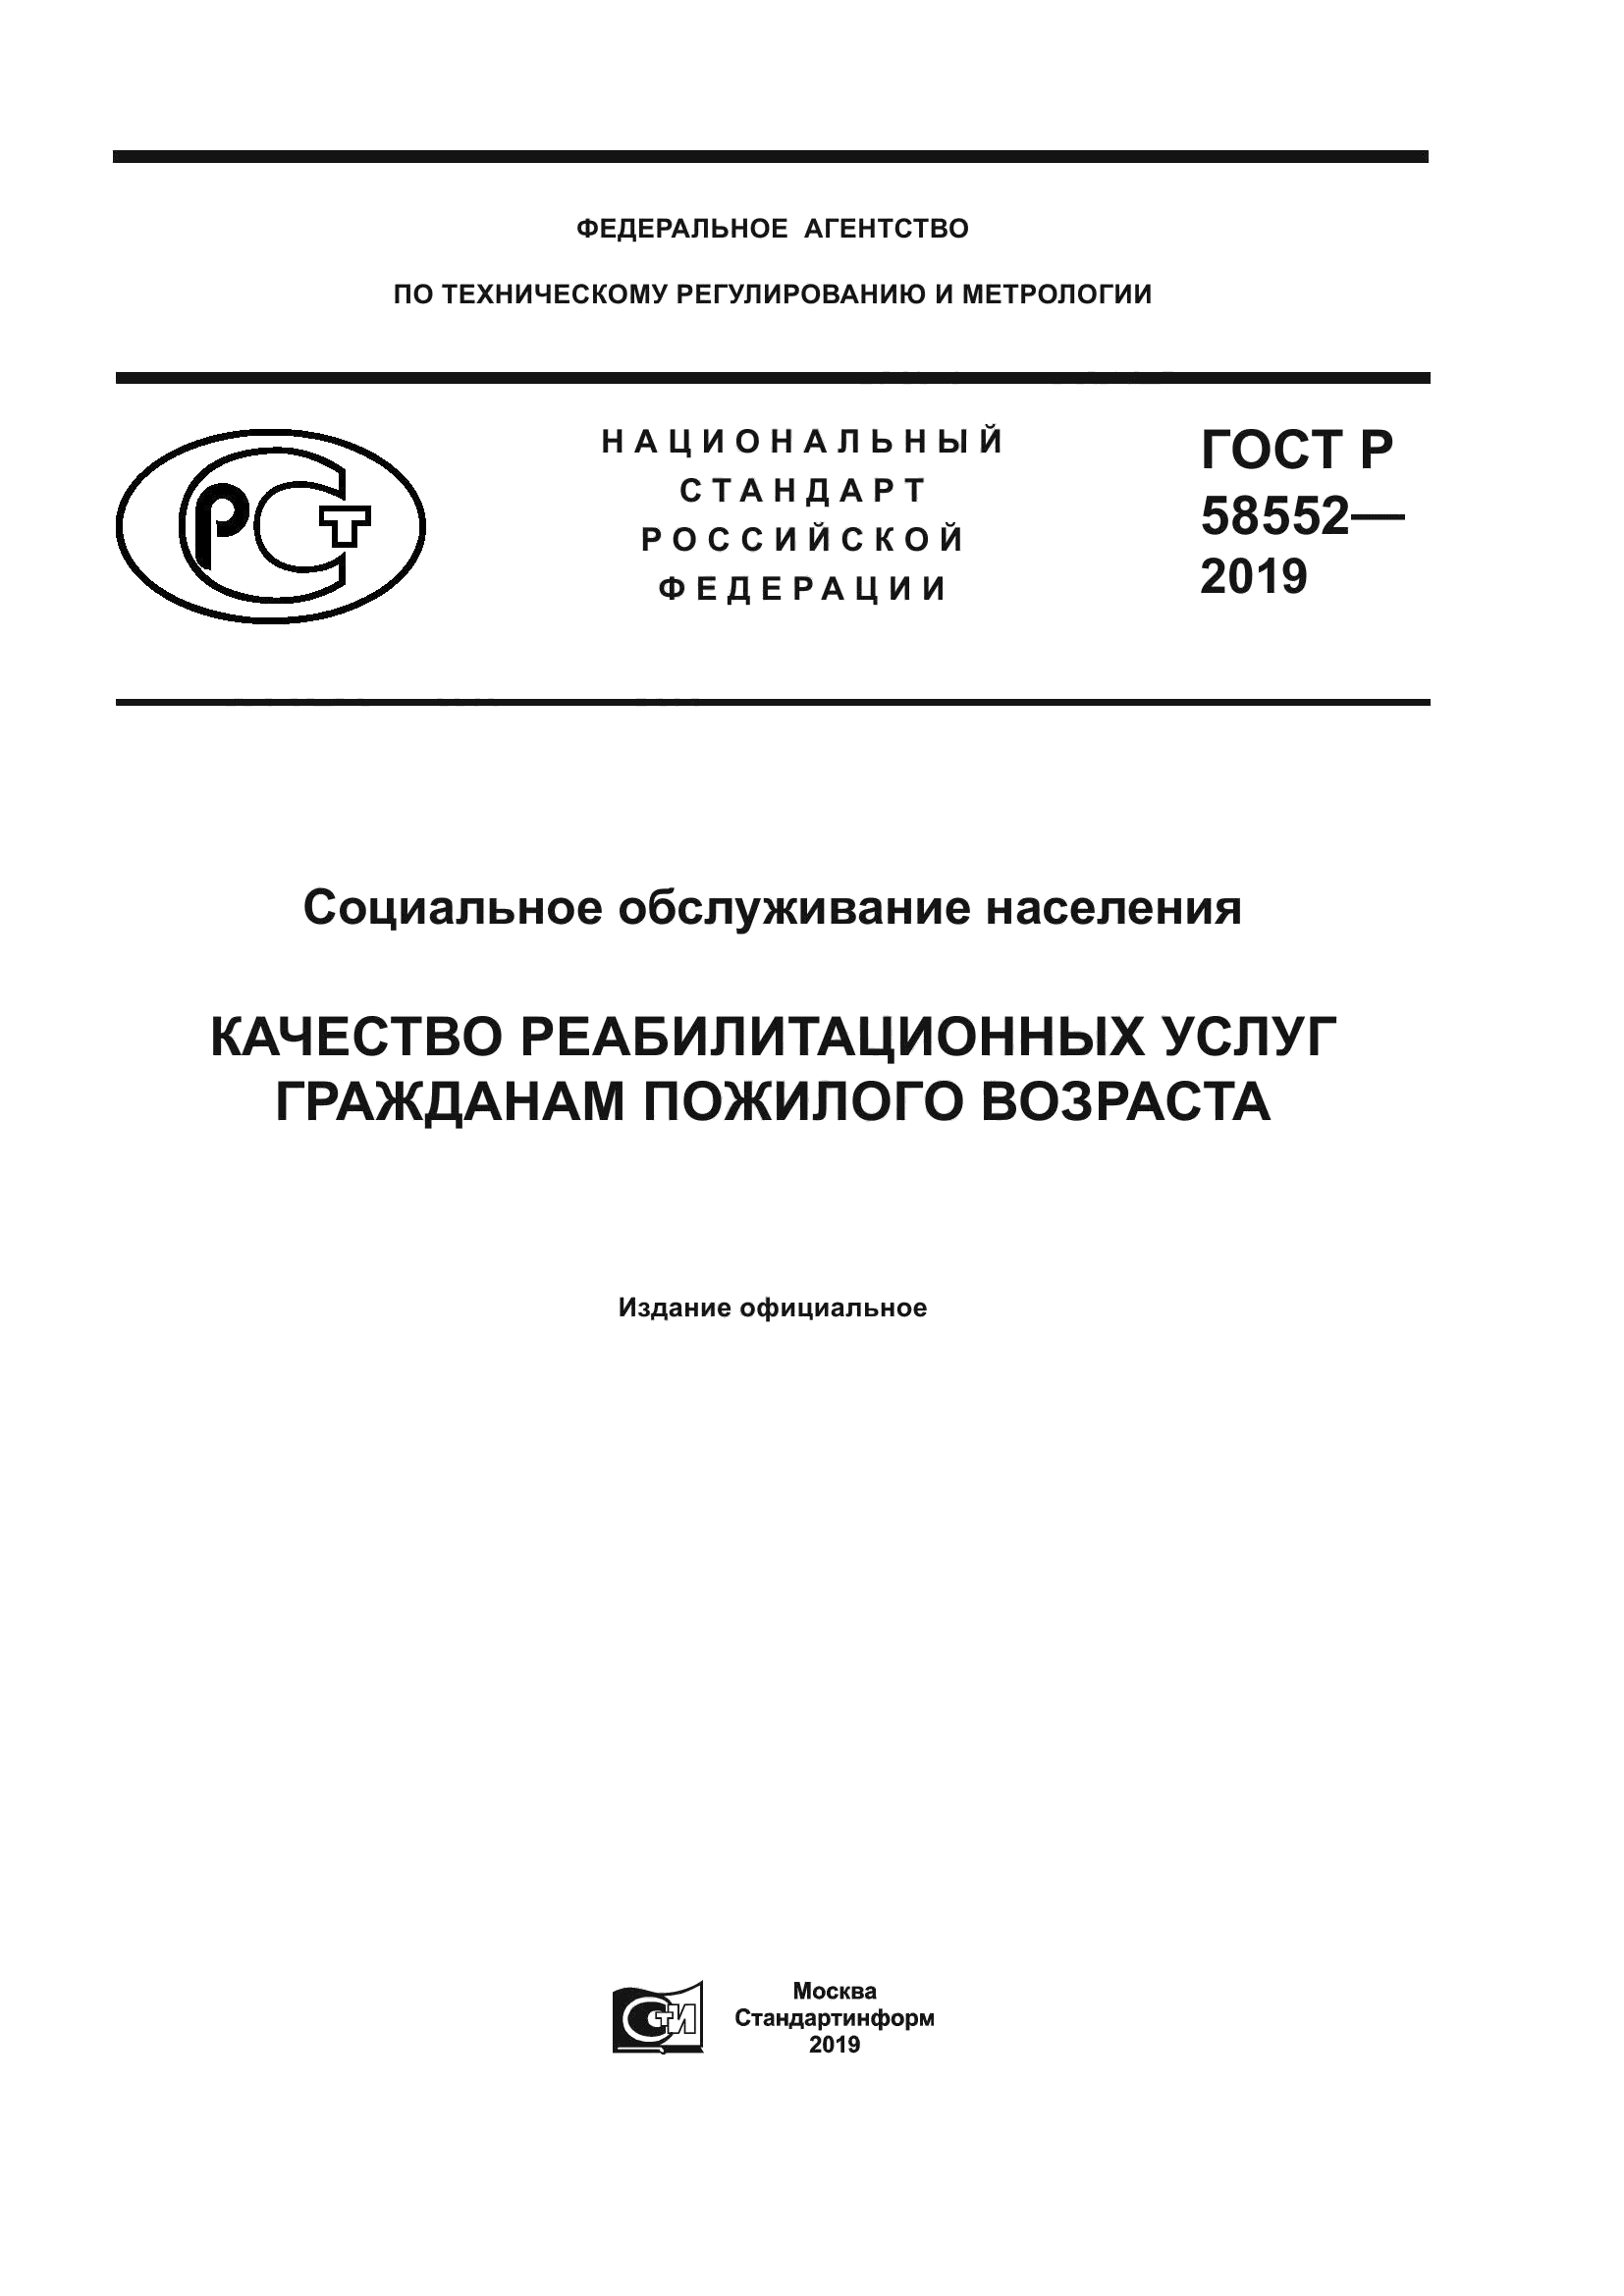 ГОСТ Р 58552-2019